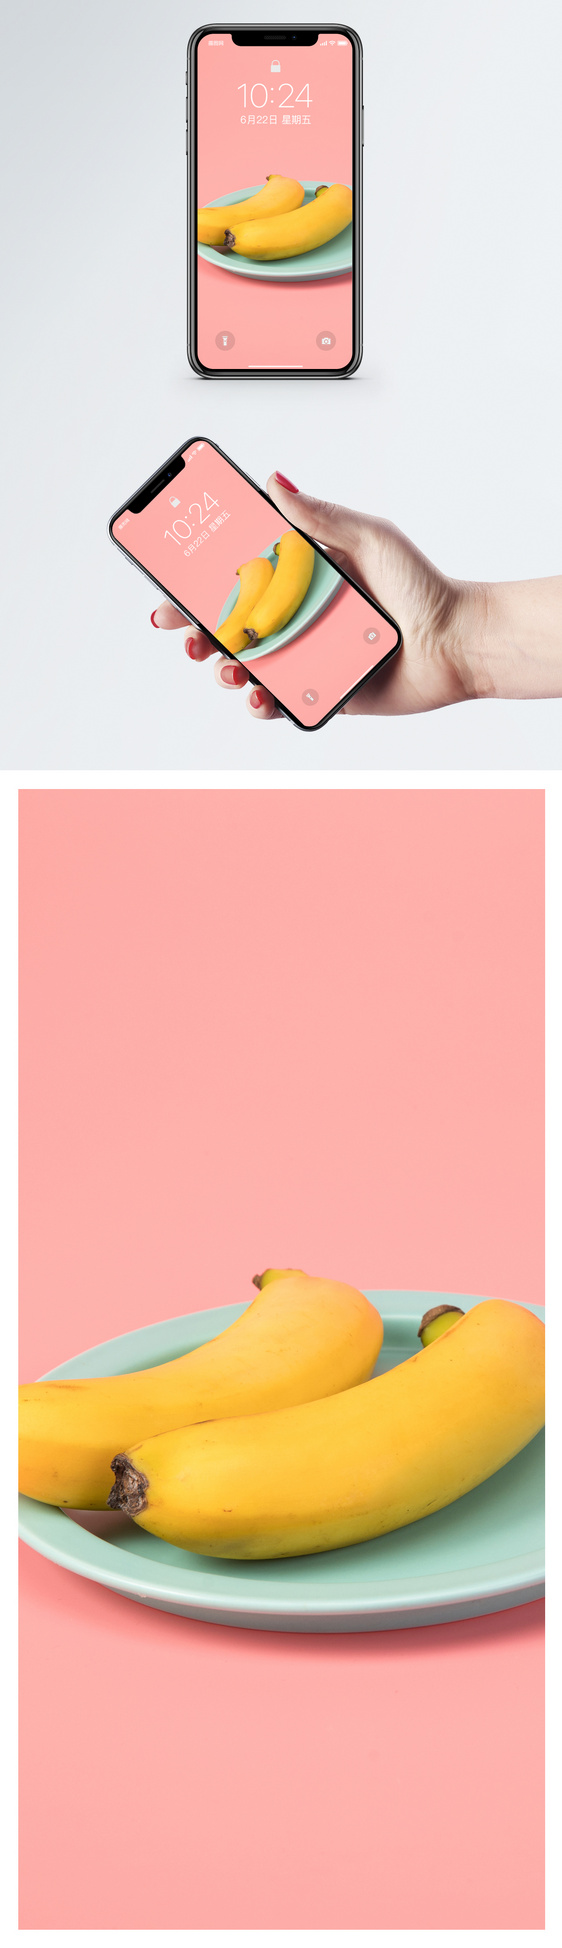 Banana Mobile Phone Wallpaper Image - Watermelons Wallpaper Phone , HD Wallpaper & Backgrounds